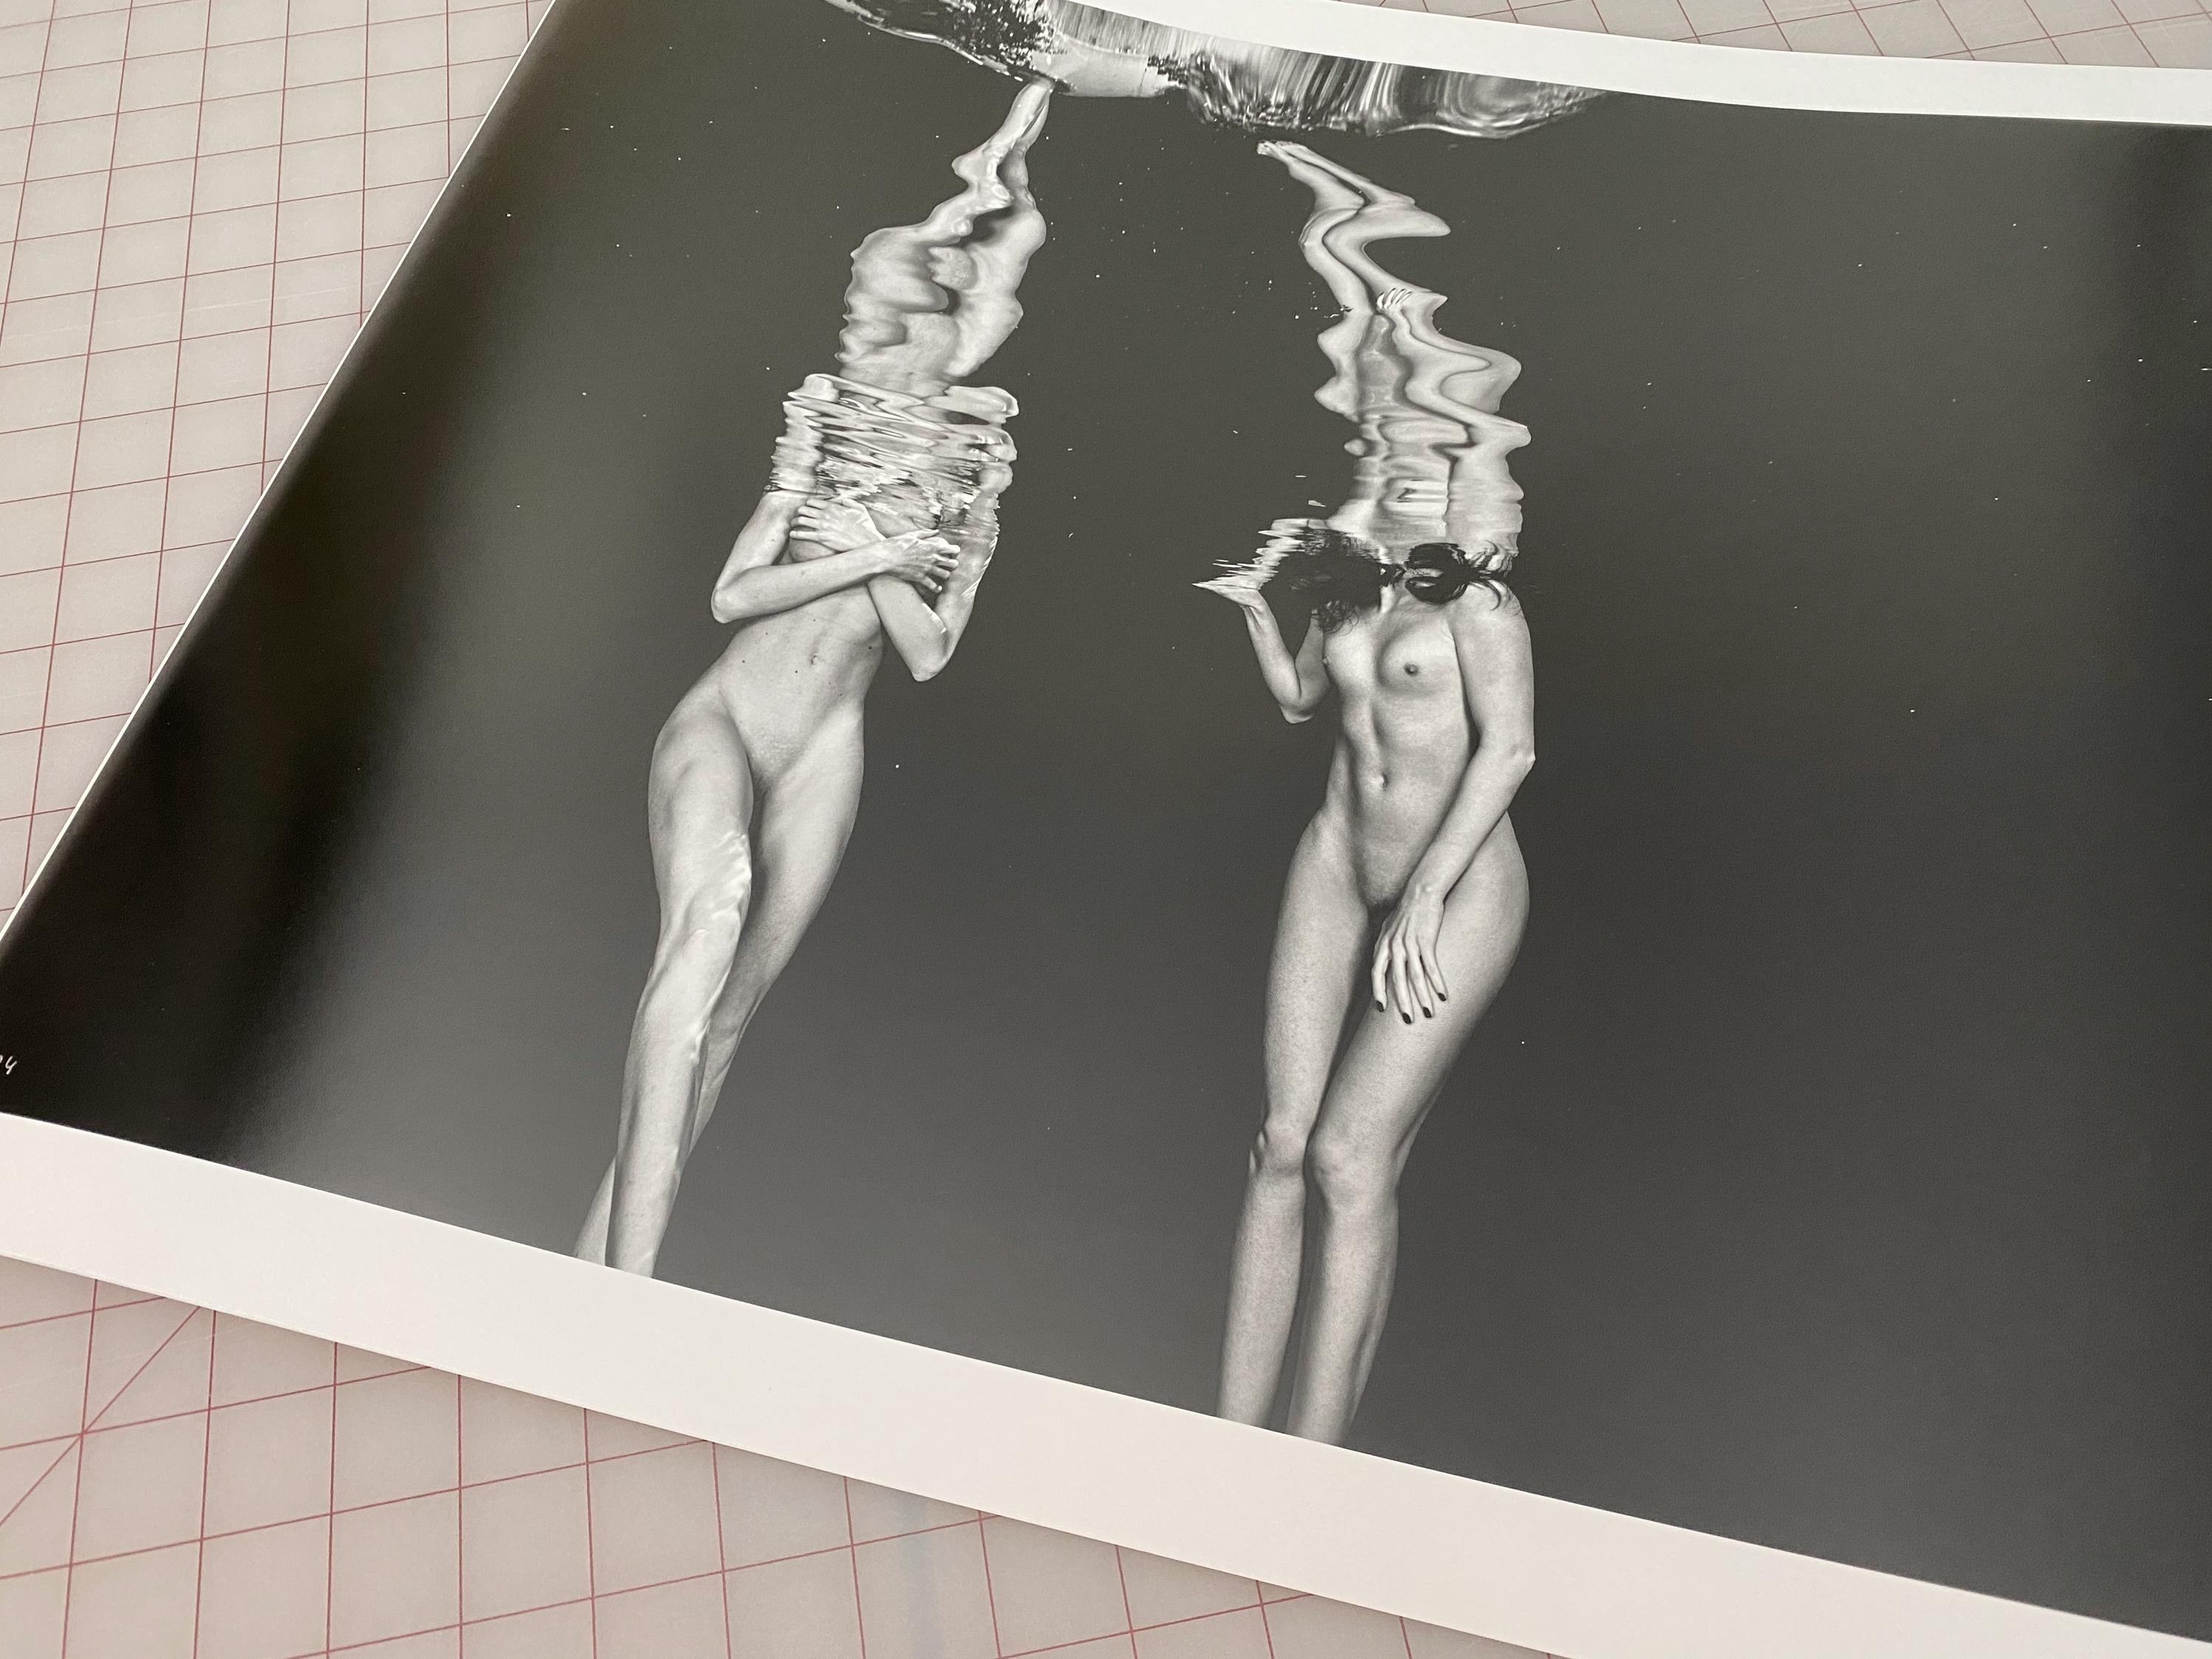 Small Talk - underwater black & white nude photograph - archival pigment 24x35